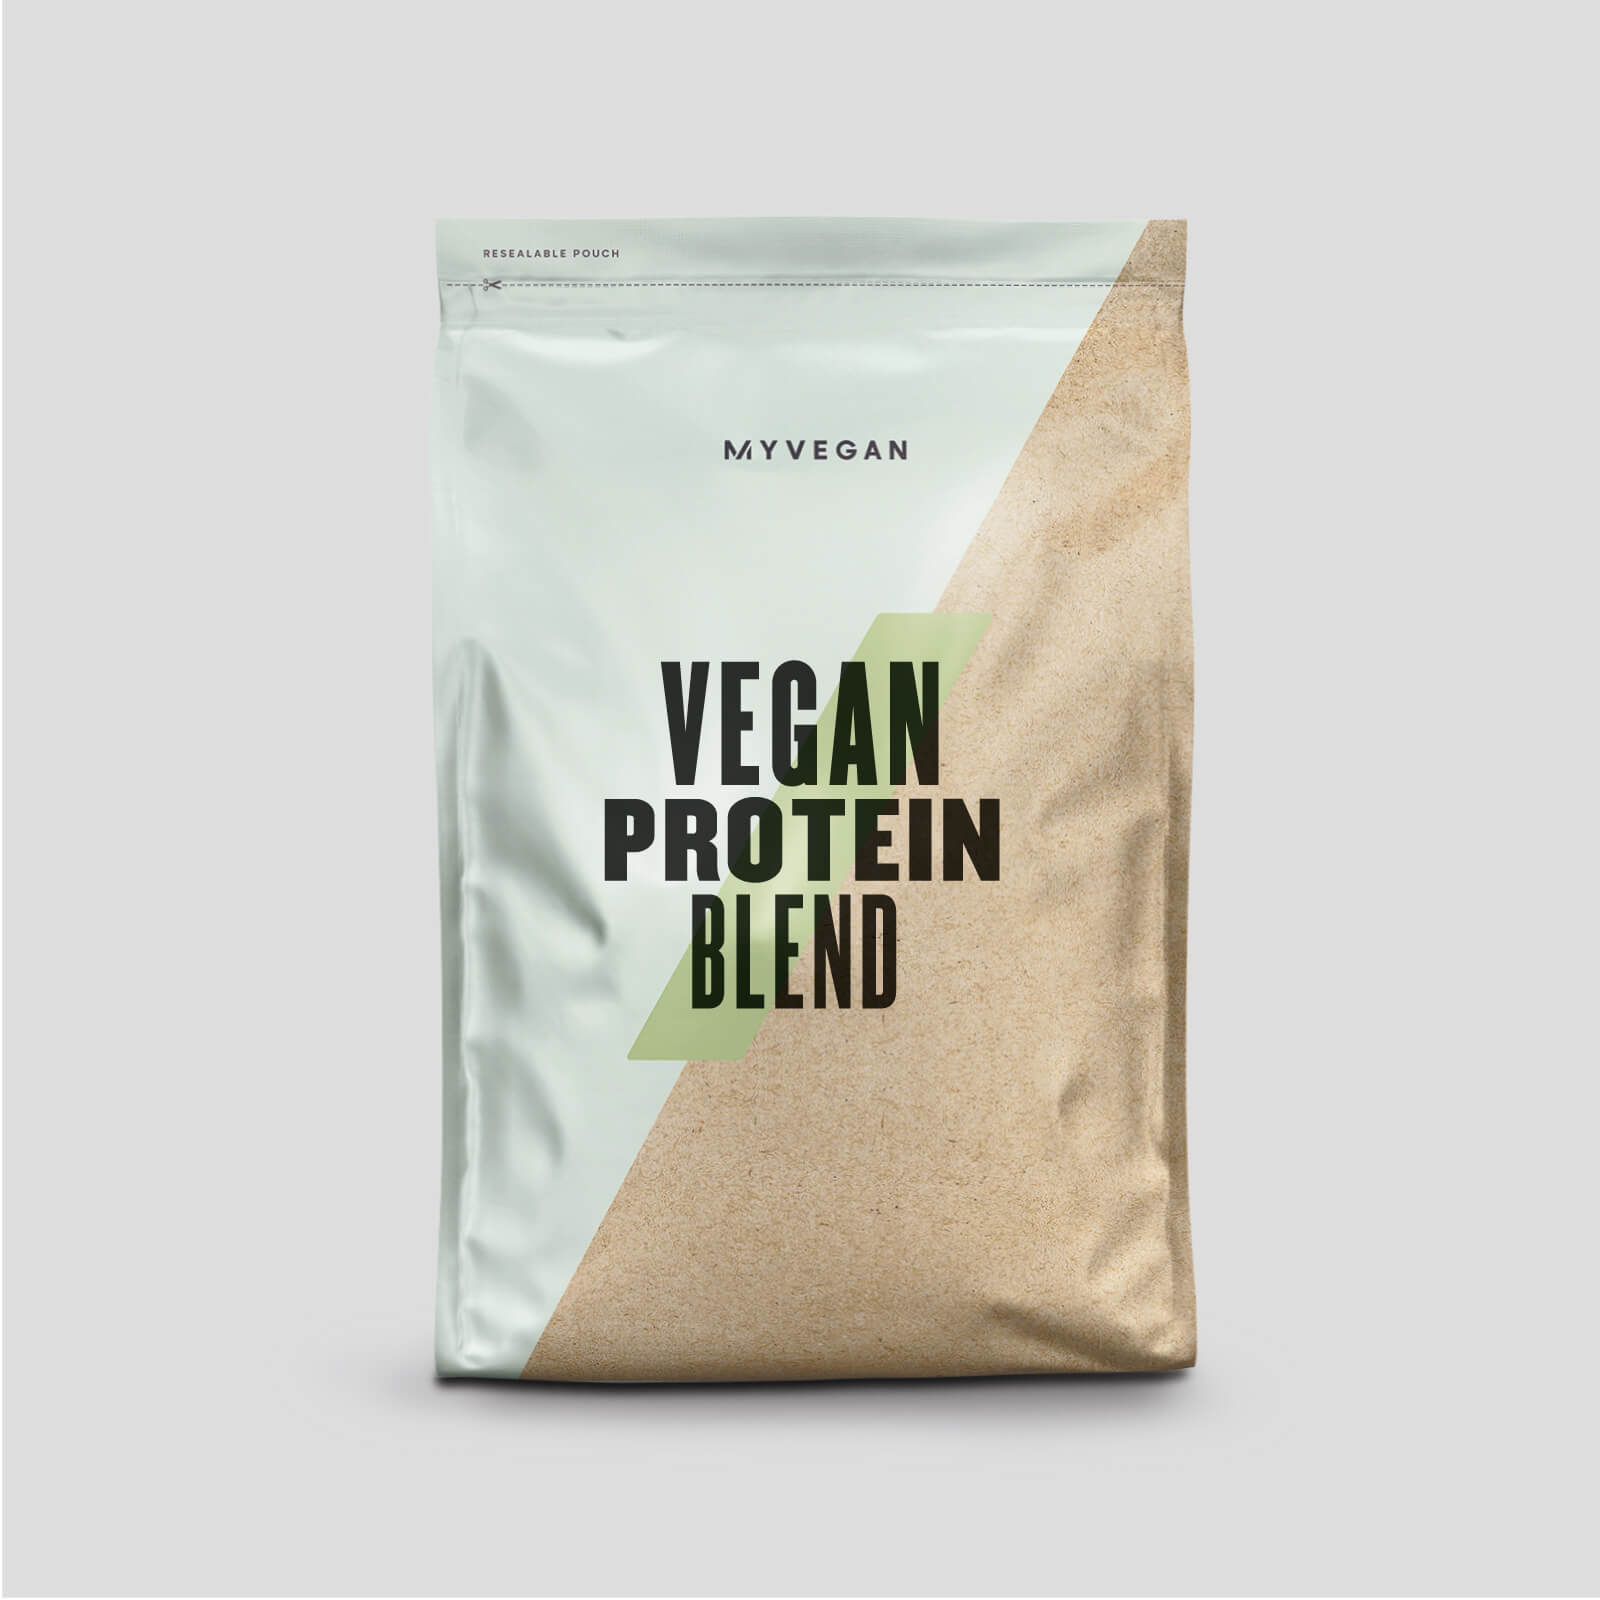 Myvegan Vegan Protein Blend - 1kg - Chocolate Peanut Caramel